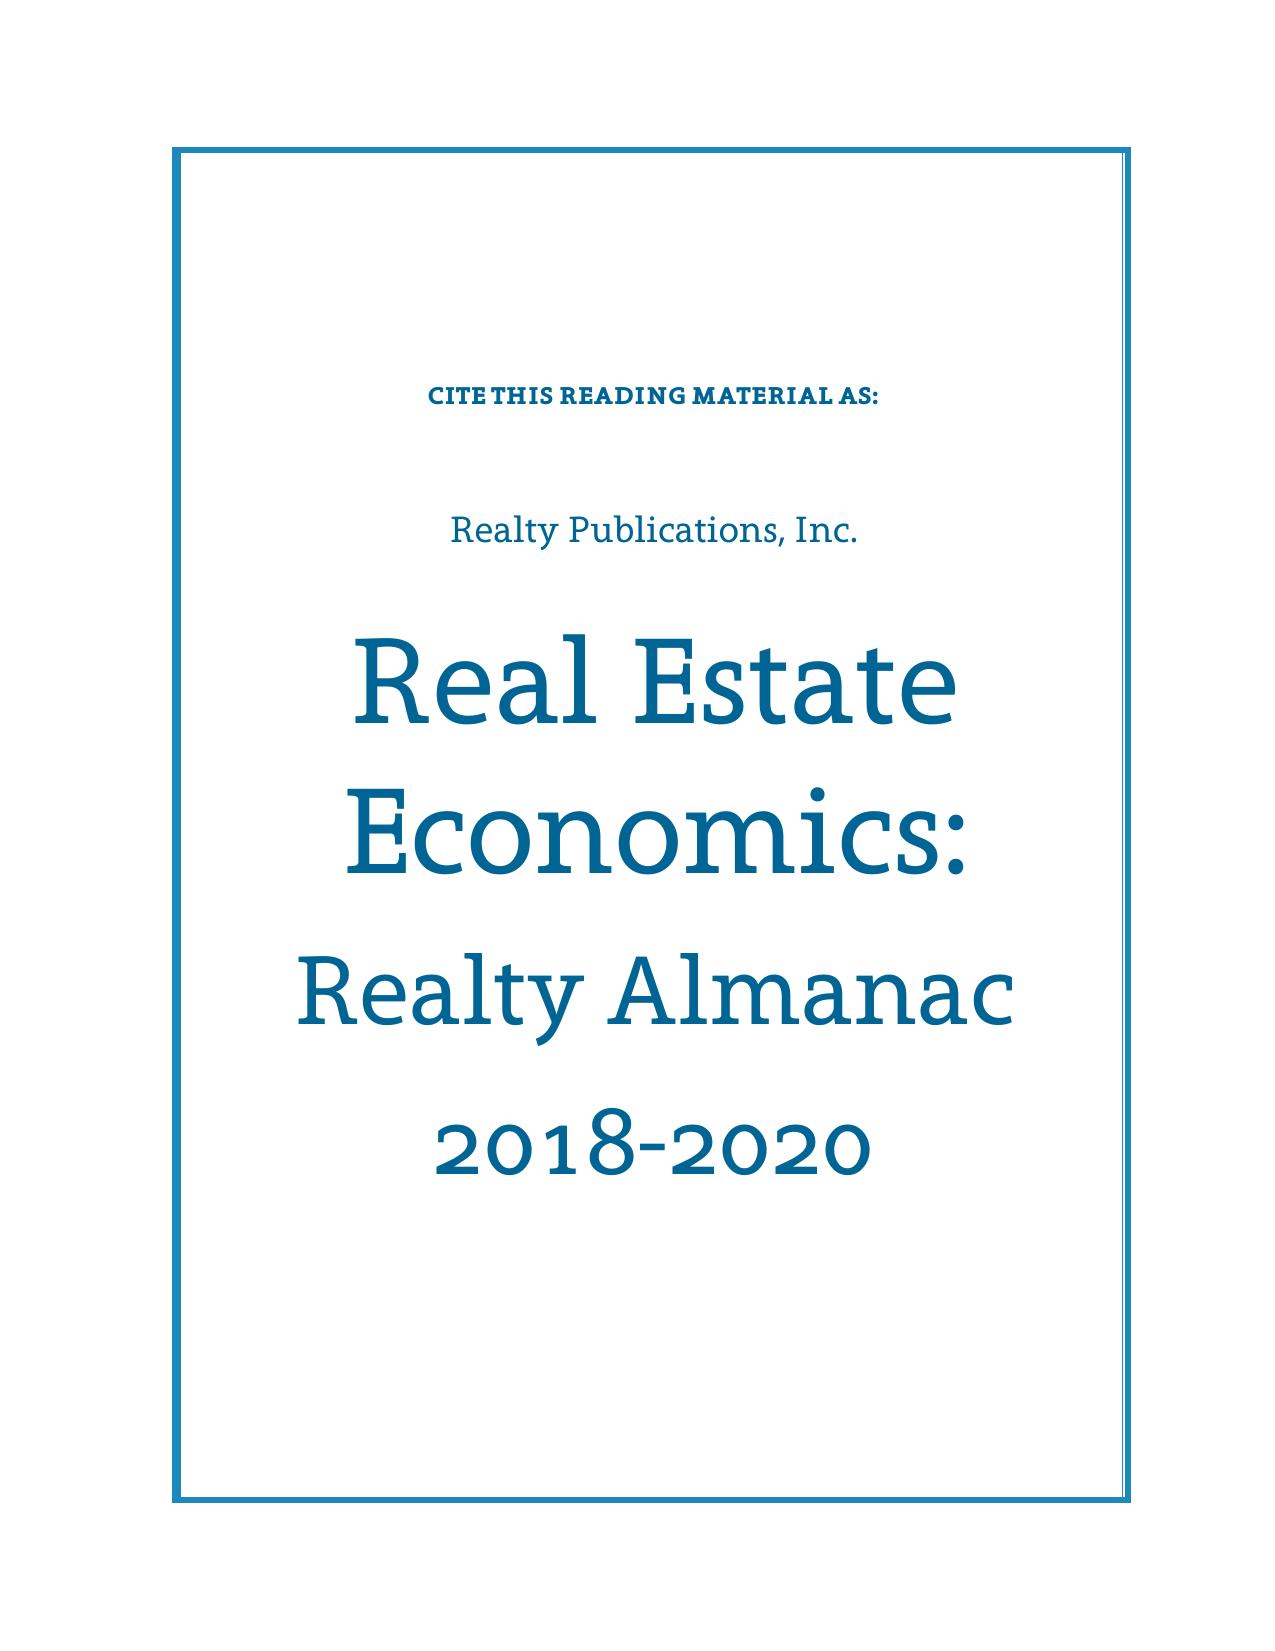 Real Estate Economics 2018-2020